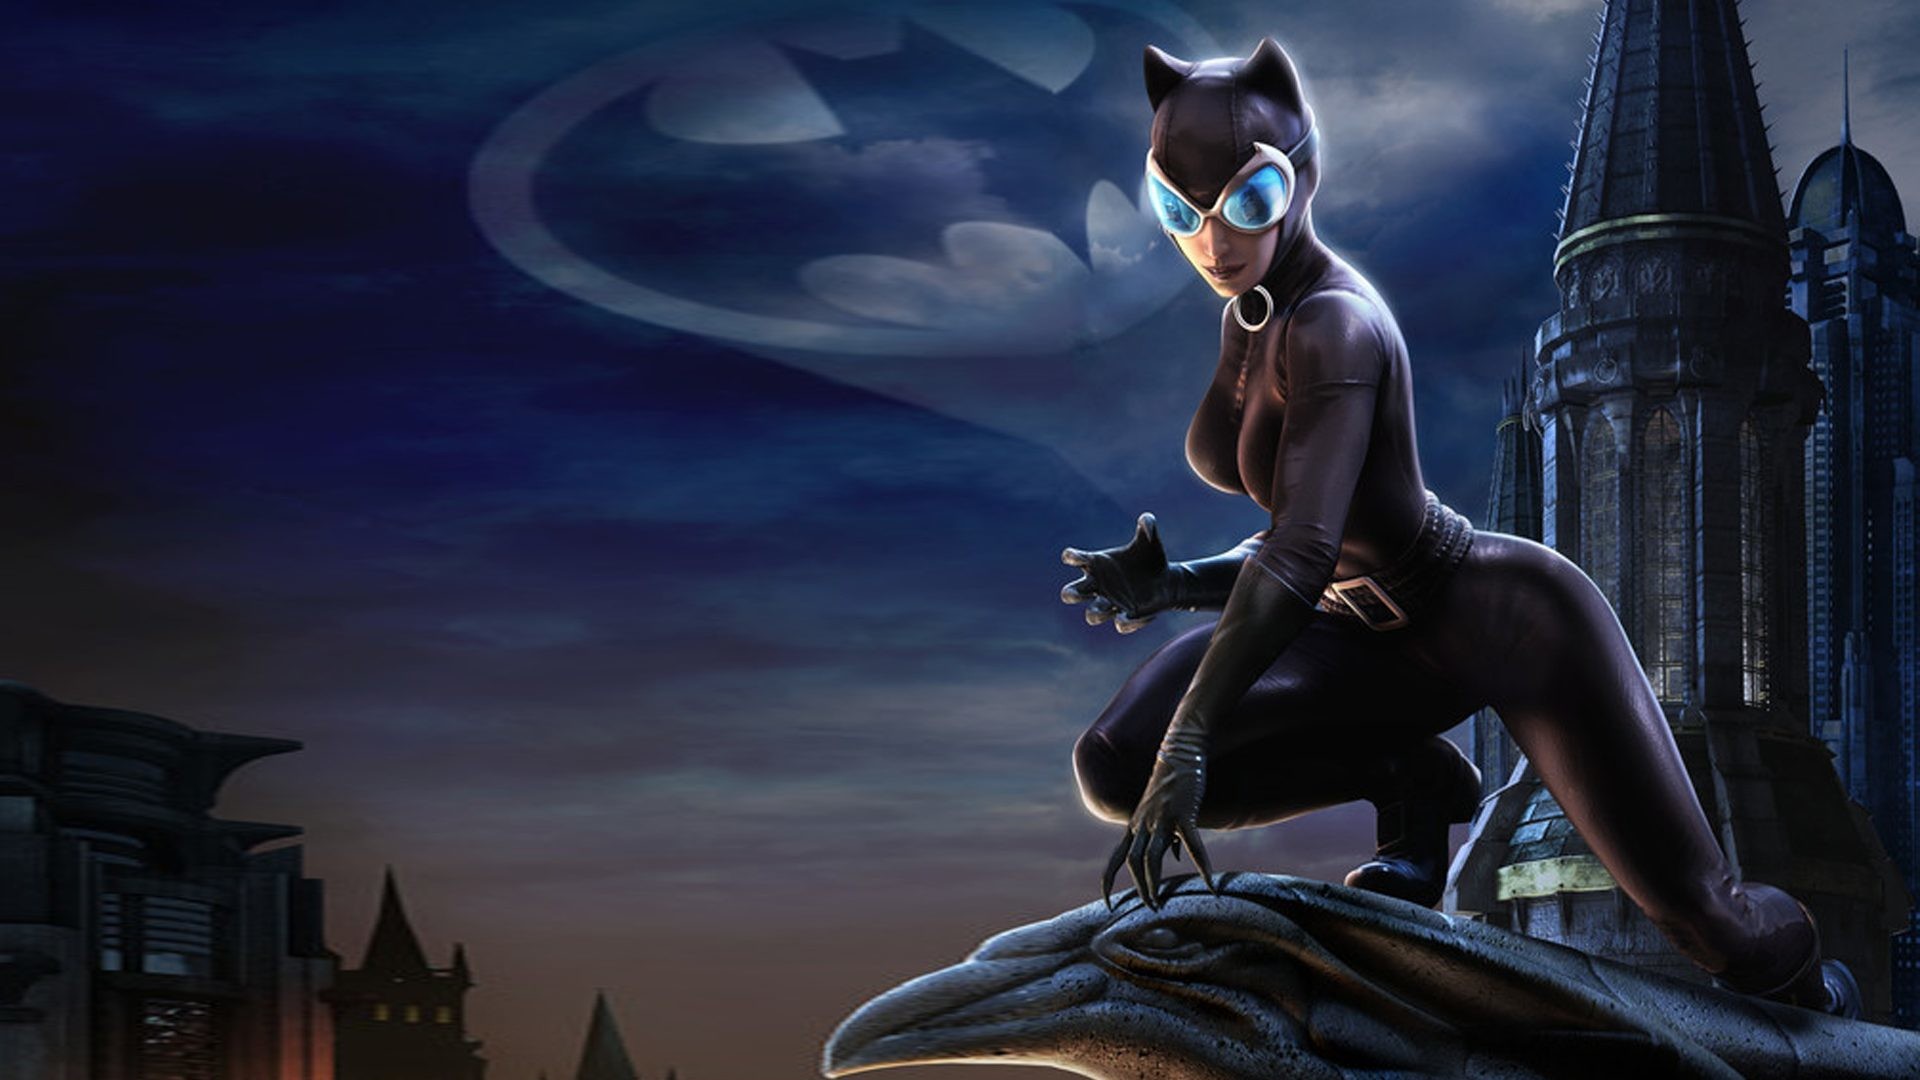 dc hd wallpapers 1080p,fictional character,batman,catwoman,cg artwork,supervillain